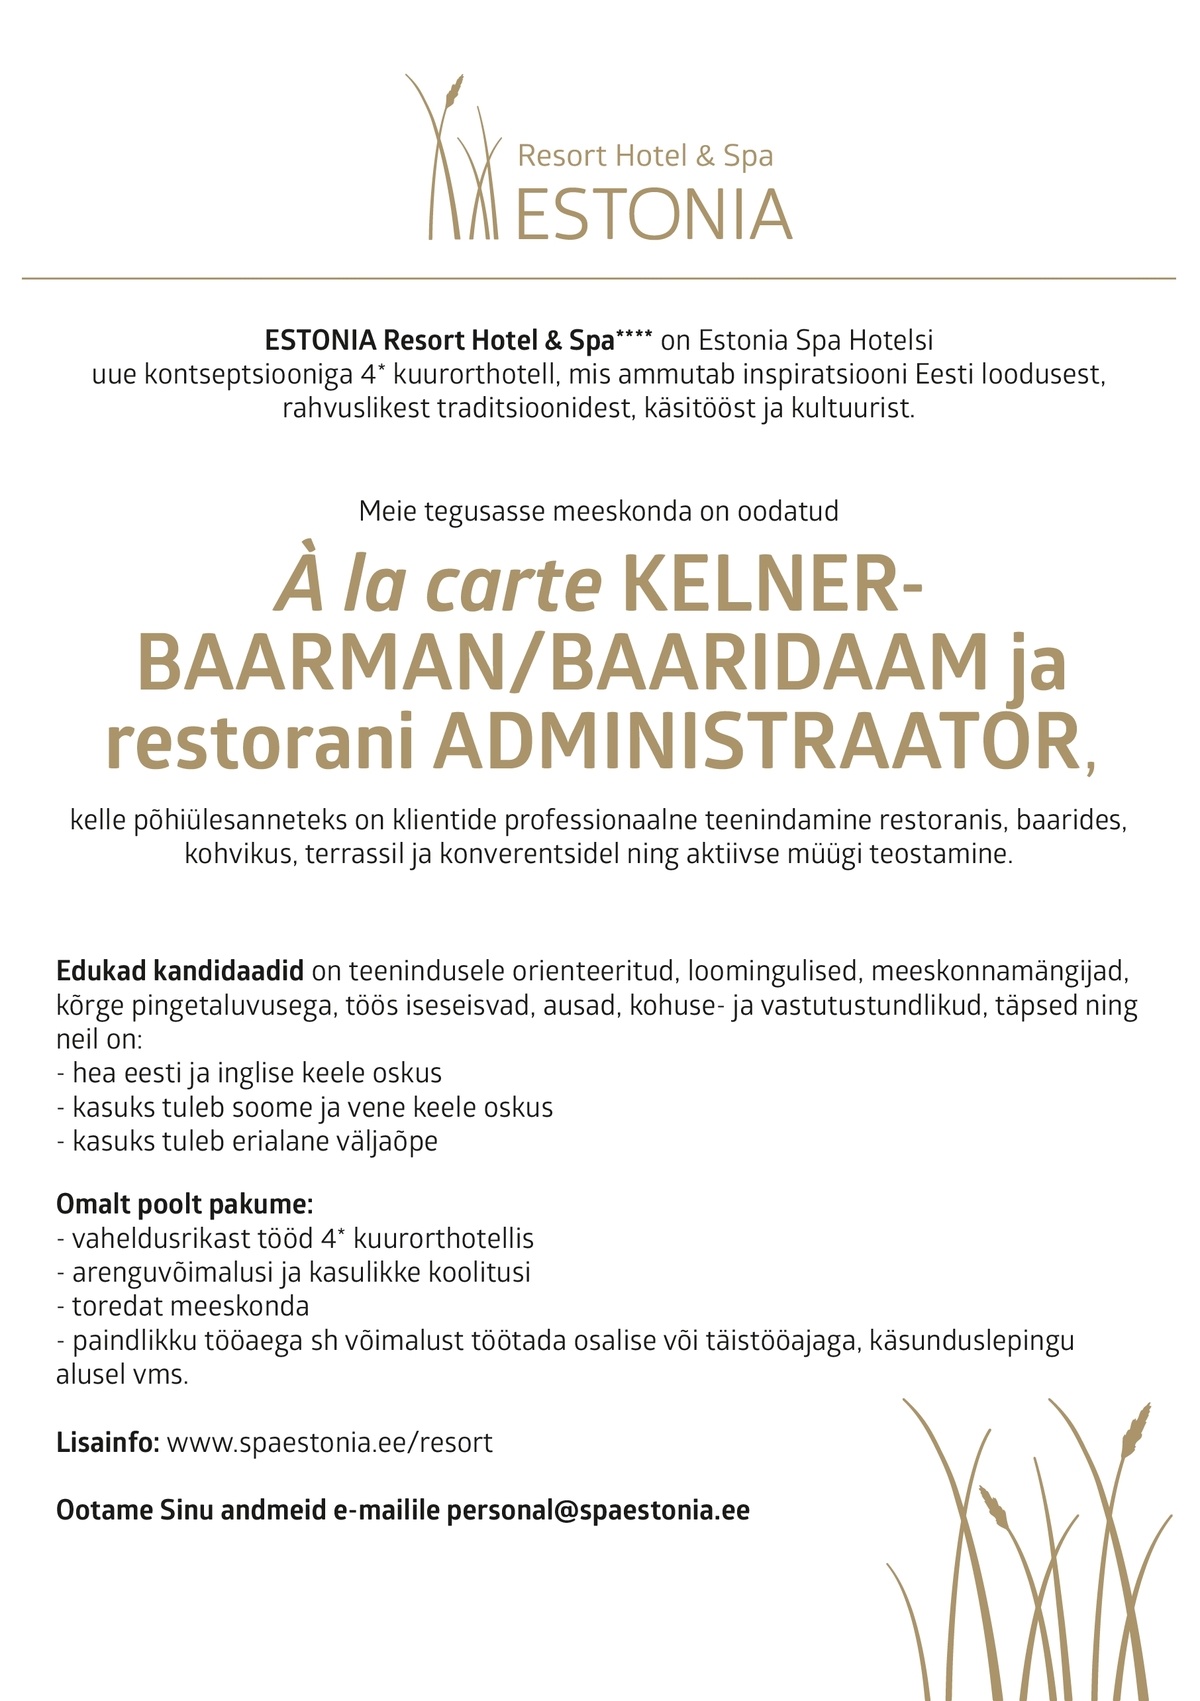 Estonia Spa Hotels AS A`la carte KELNER-BAARMAN/BAARIDAAM ja restorani ADMINISTRAATOR